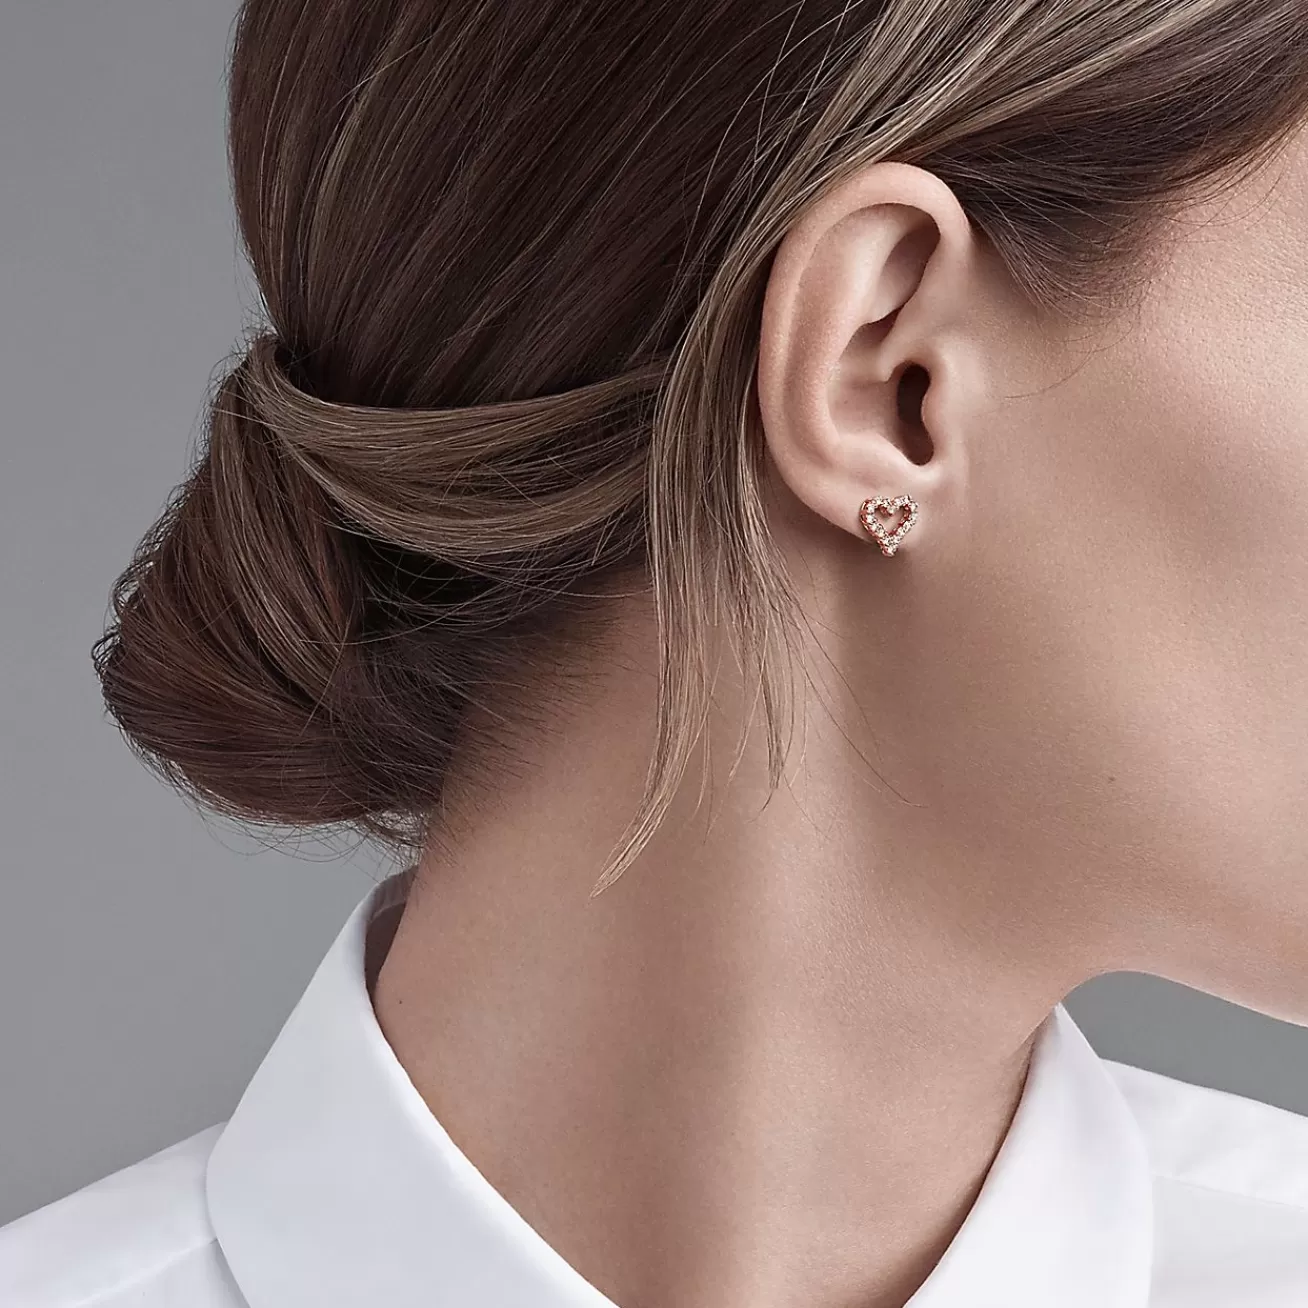 Tiffany & Co. Heart earrings in 18k rose gold with diamonds, extra mini. | ^ Earrings | Rose Gold Jewelry